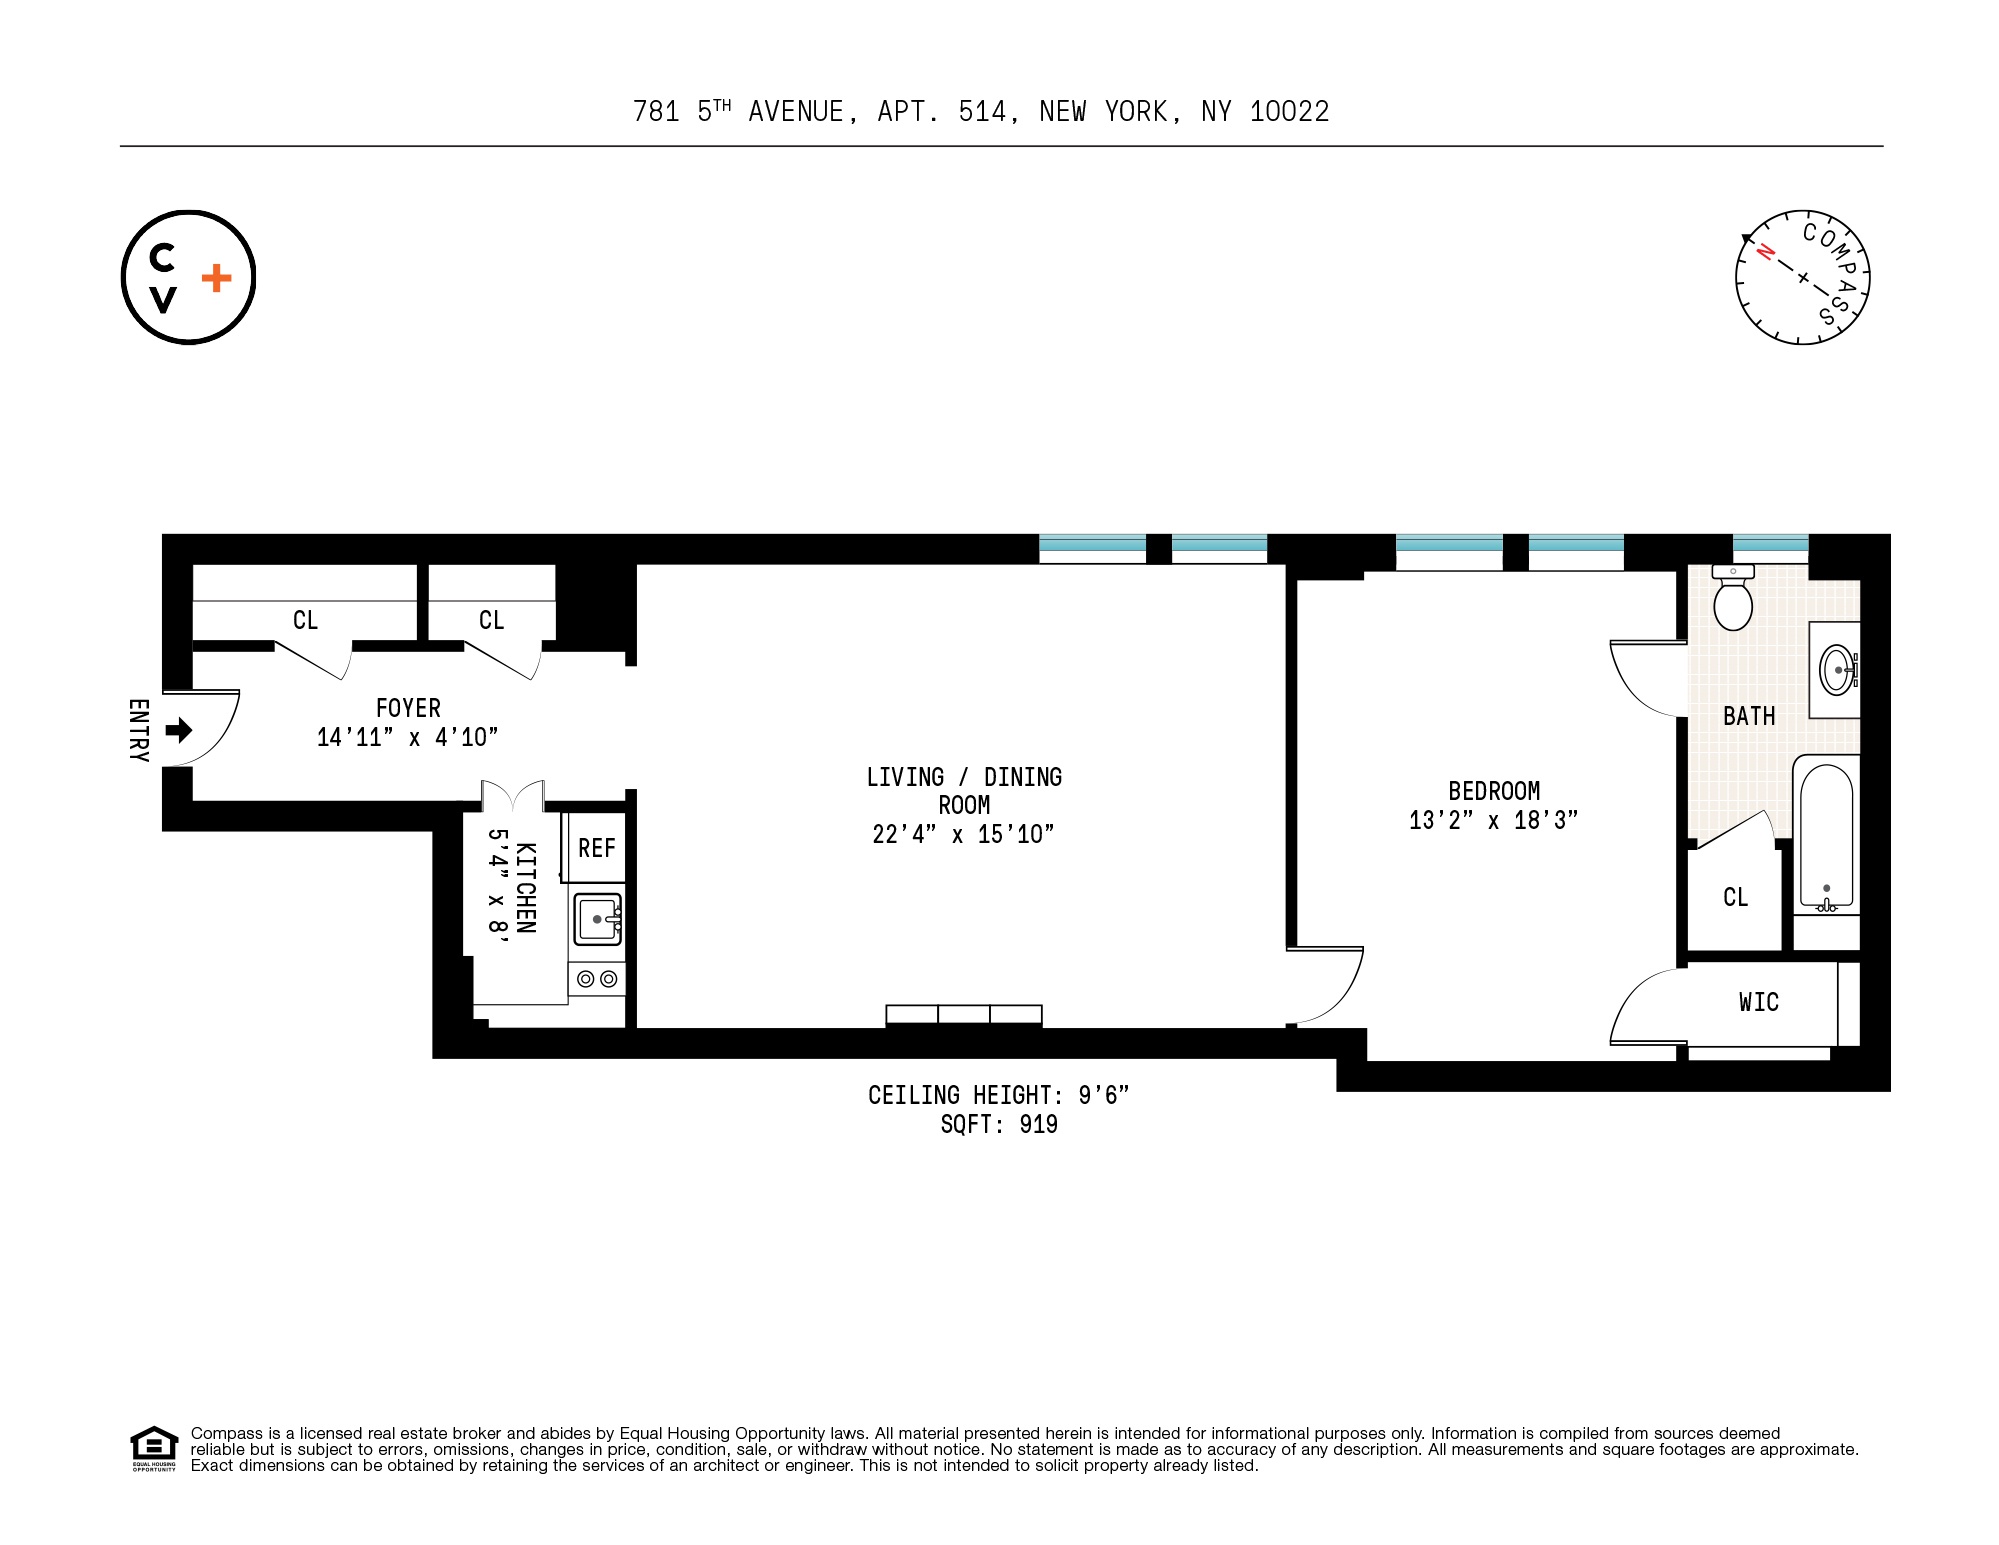 Floorplan for 781 5th Avenue, 514